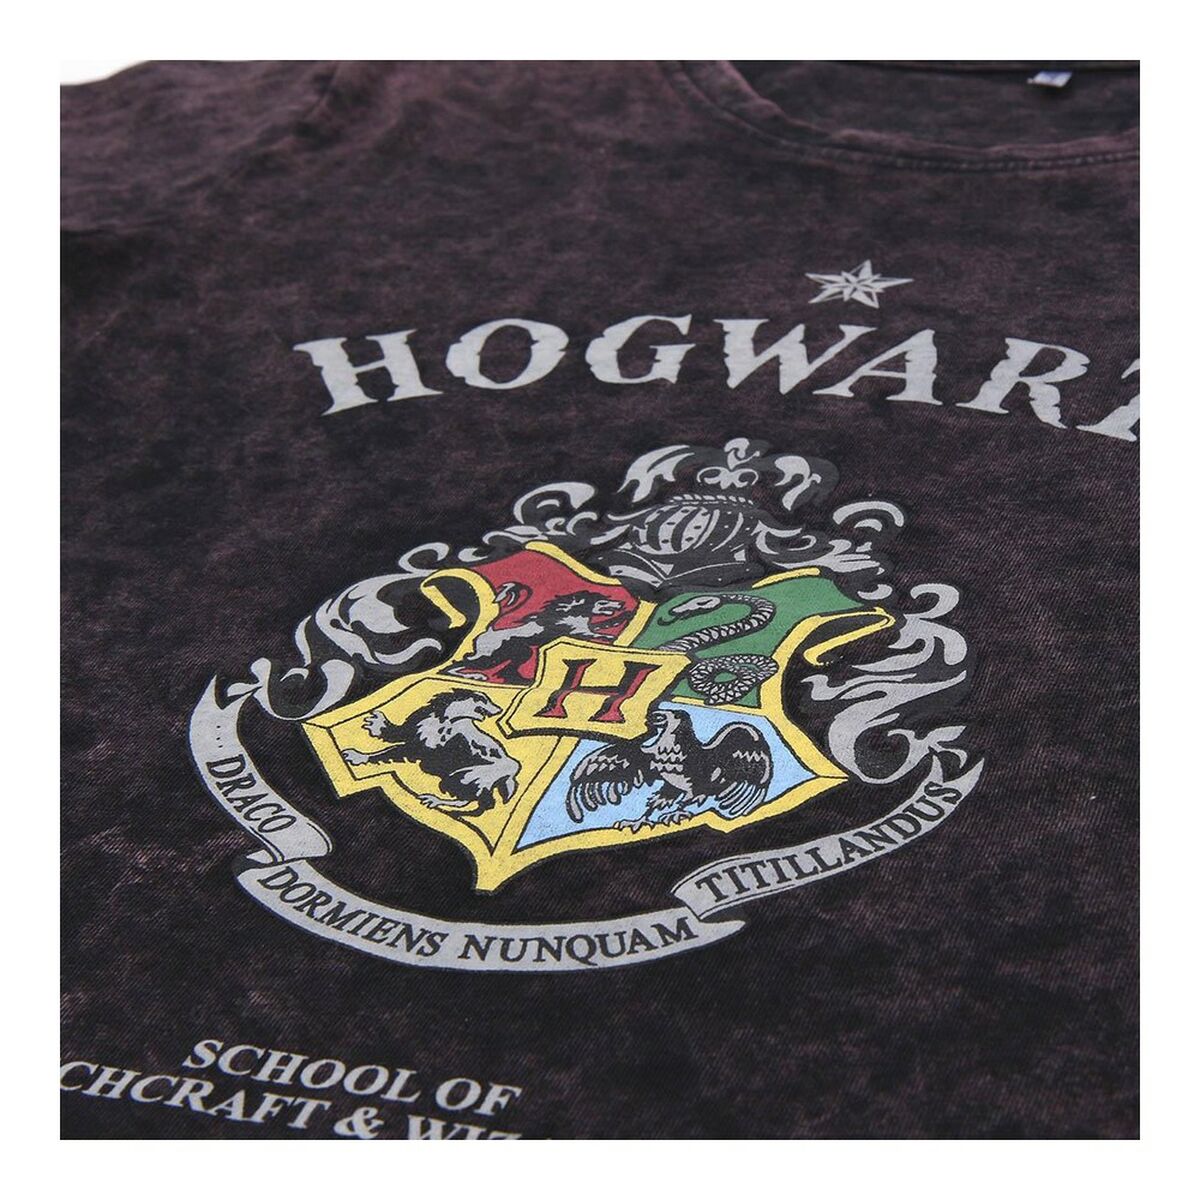 Kinder-T-Shirt met Lange Mouwen Harry Potter Grijs Donker grijs